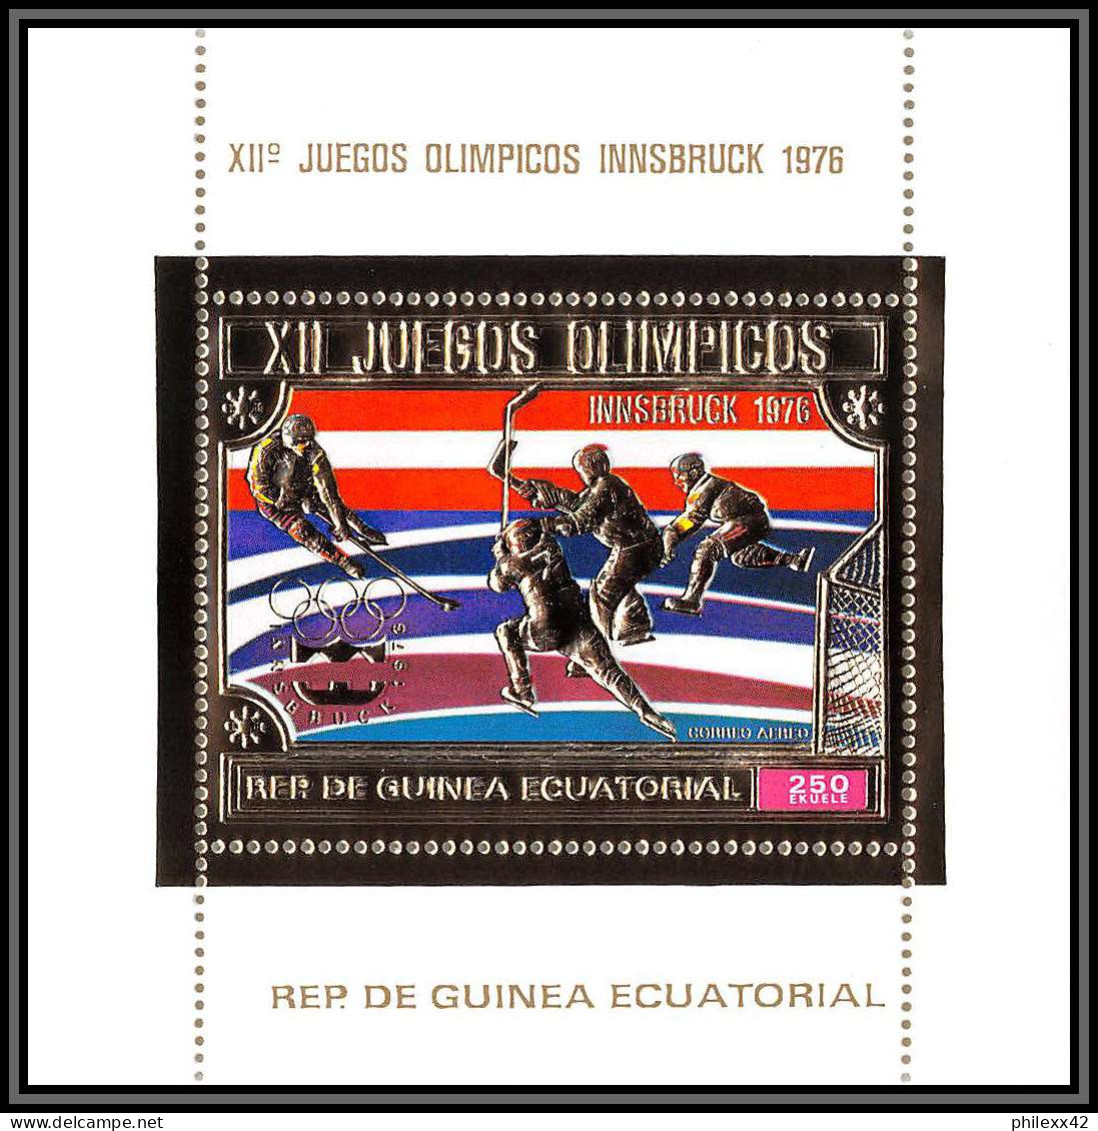 86172/ Guinée équatoriale Guinea Mi N°161 Innsbruck 1976 ICE HOCKEY Jeux Olympiques (olympic Games) OR Gold ** MNH - Guinea Ecuatorial